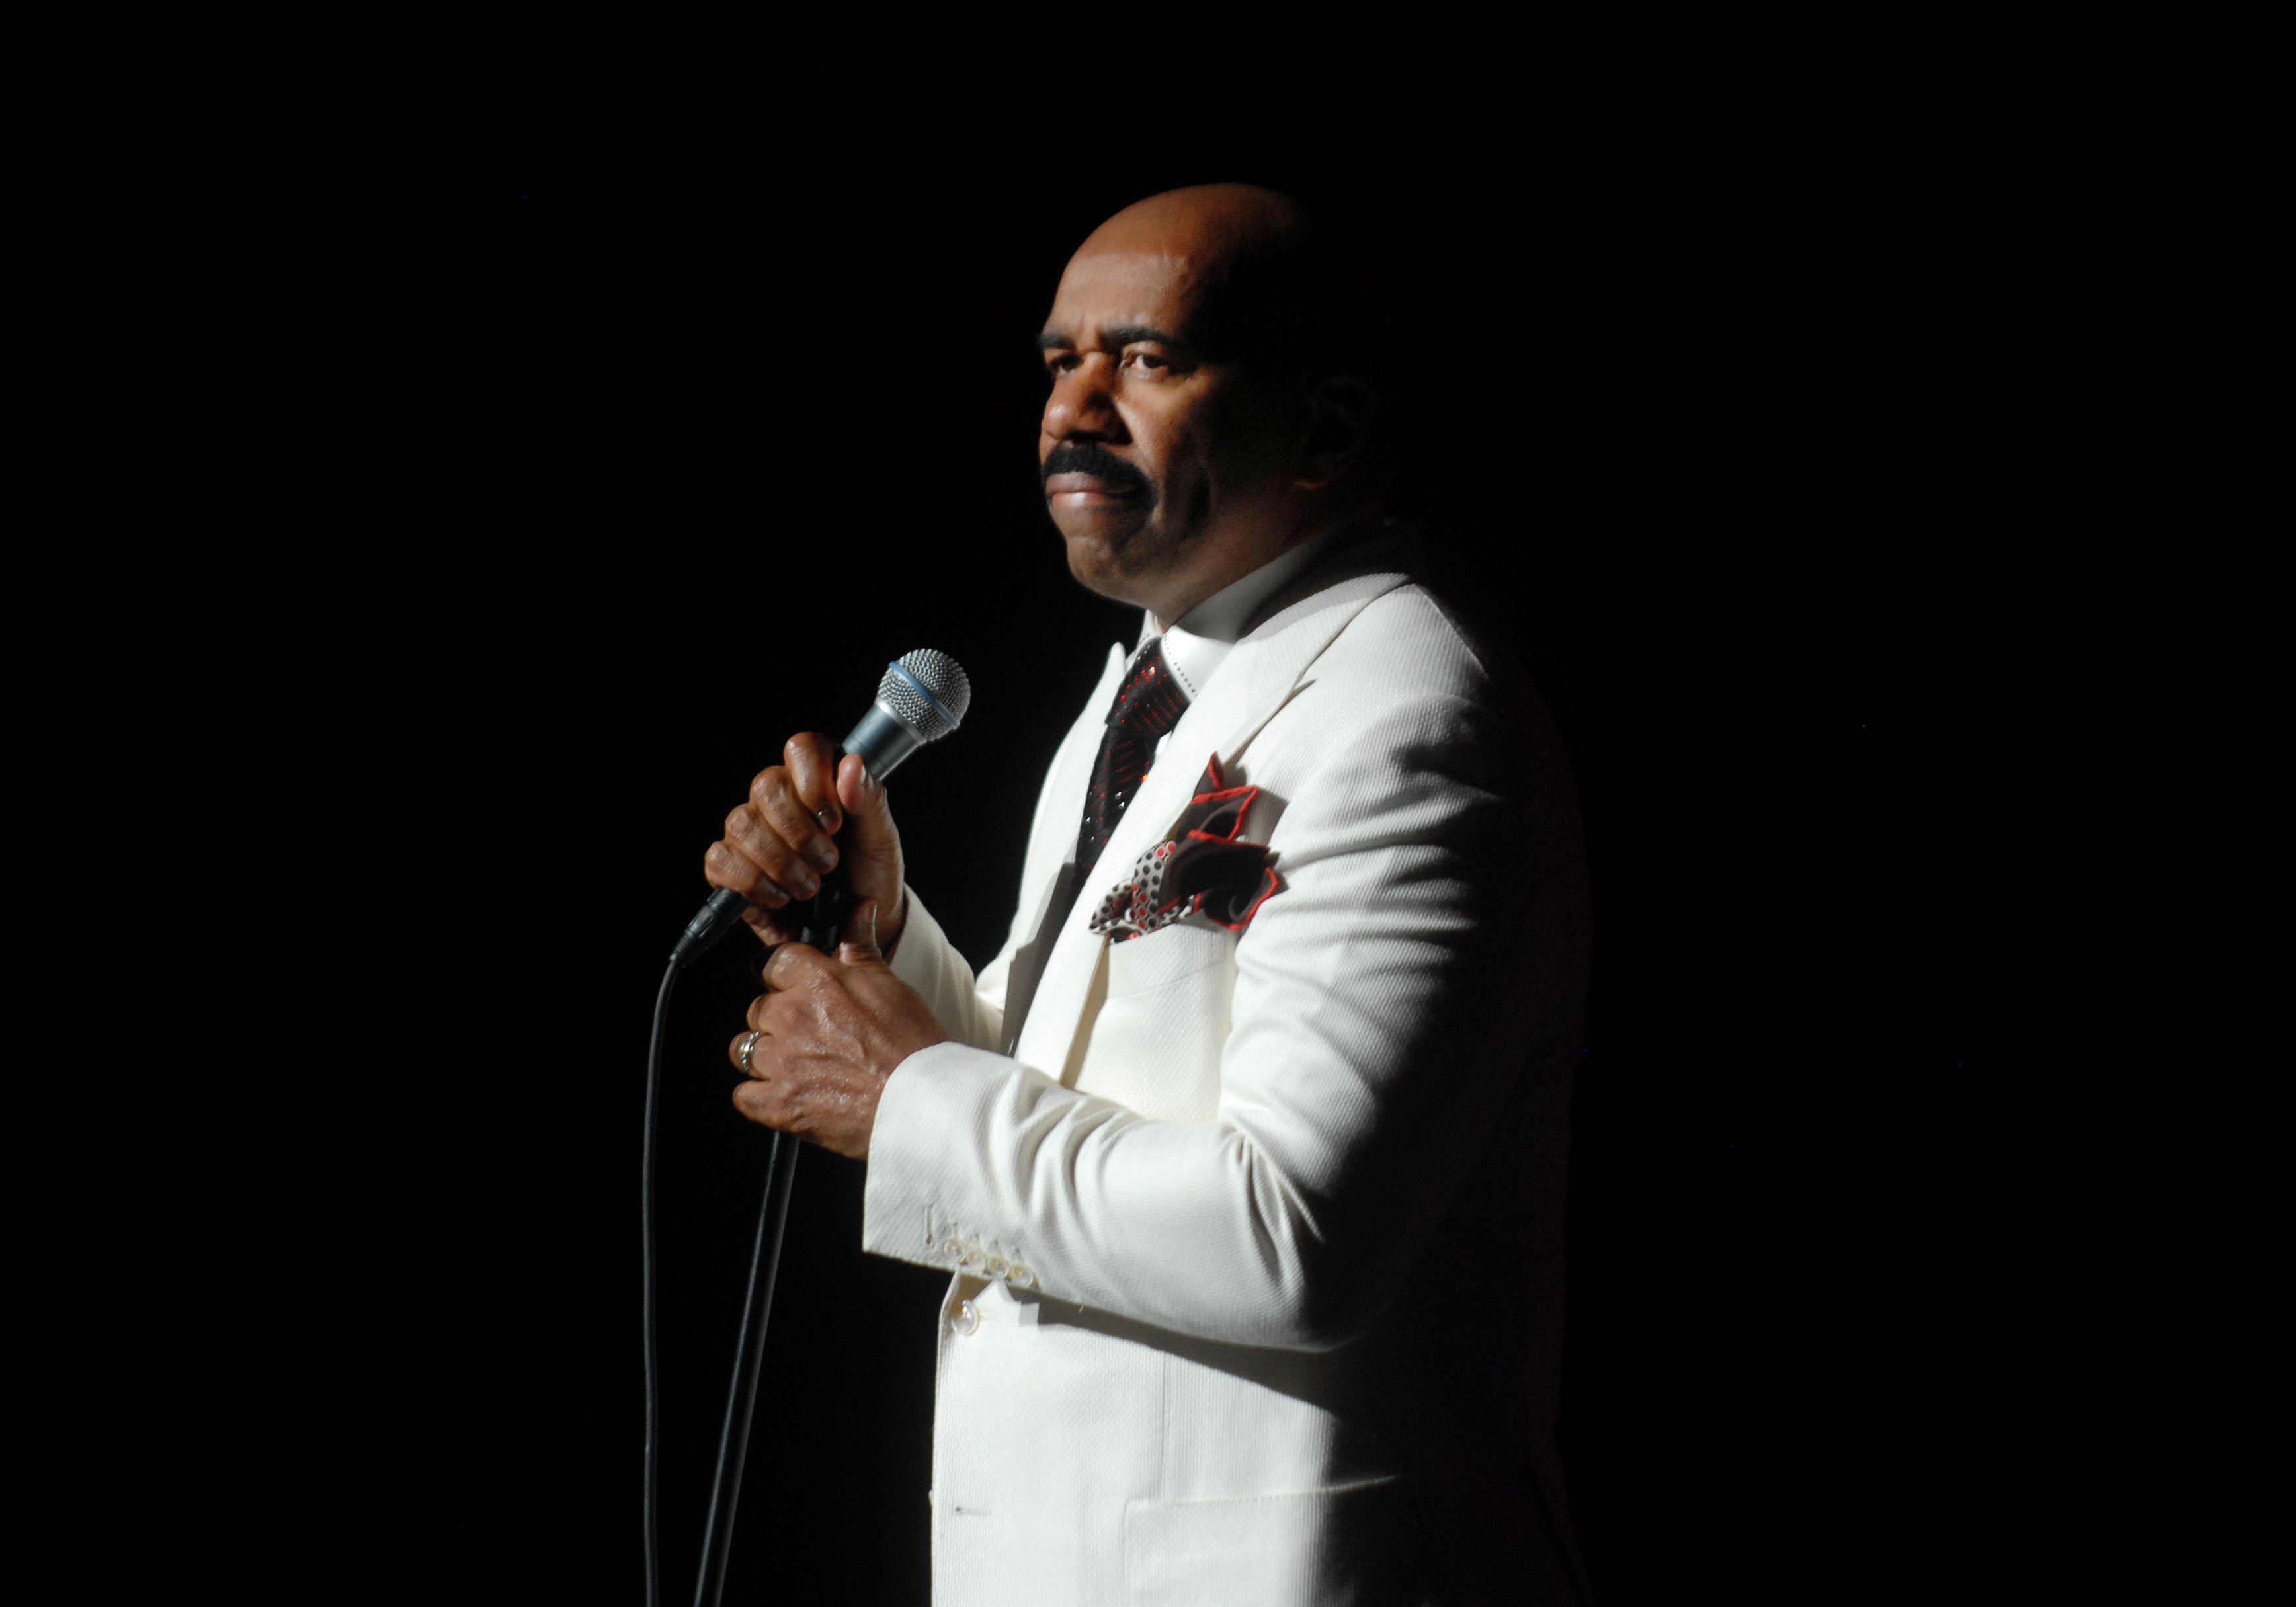 Steve Harvey Performing at Fox Theatre on June 9, 2012 in Detroit, Michigan. | Source: Gett Images